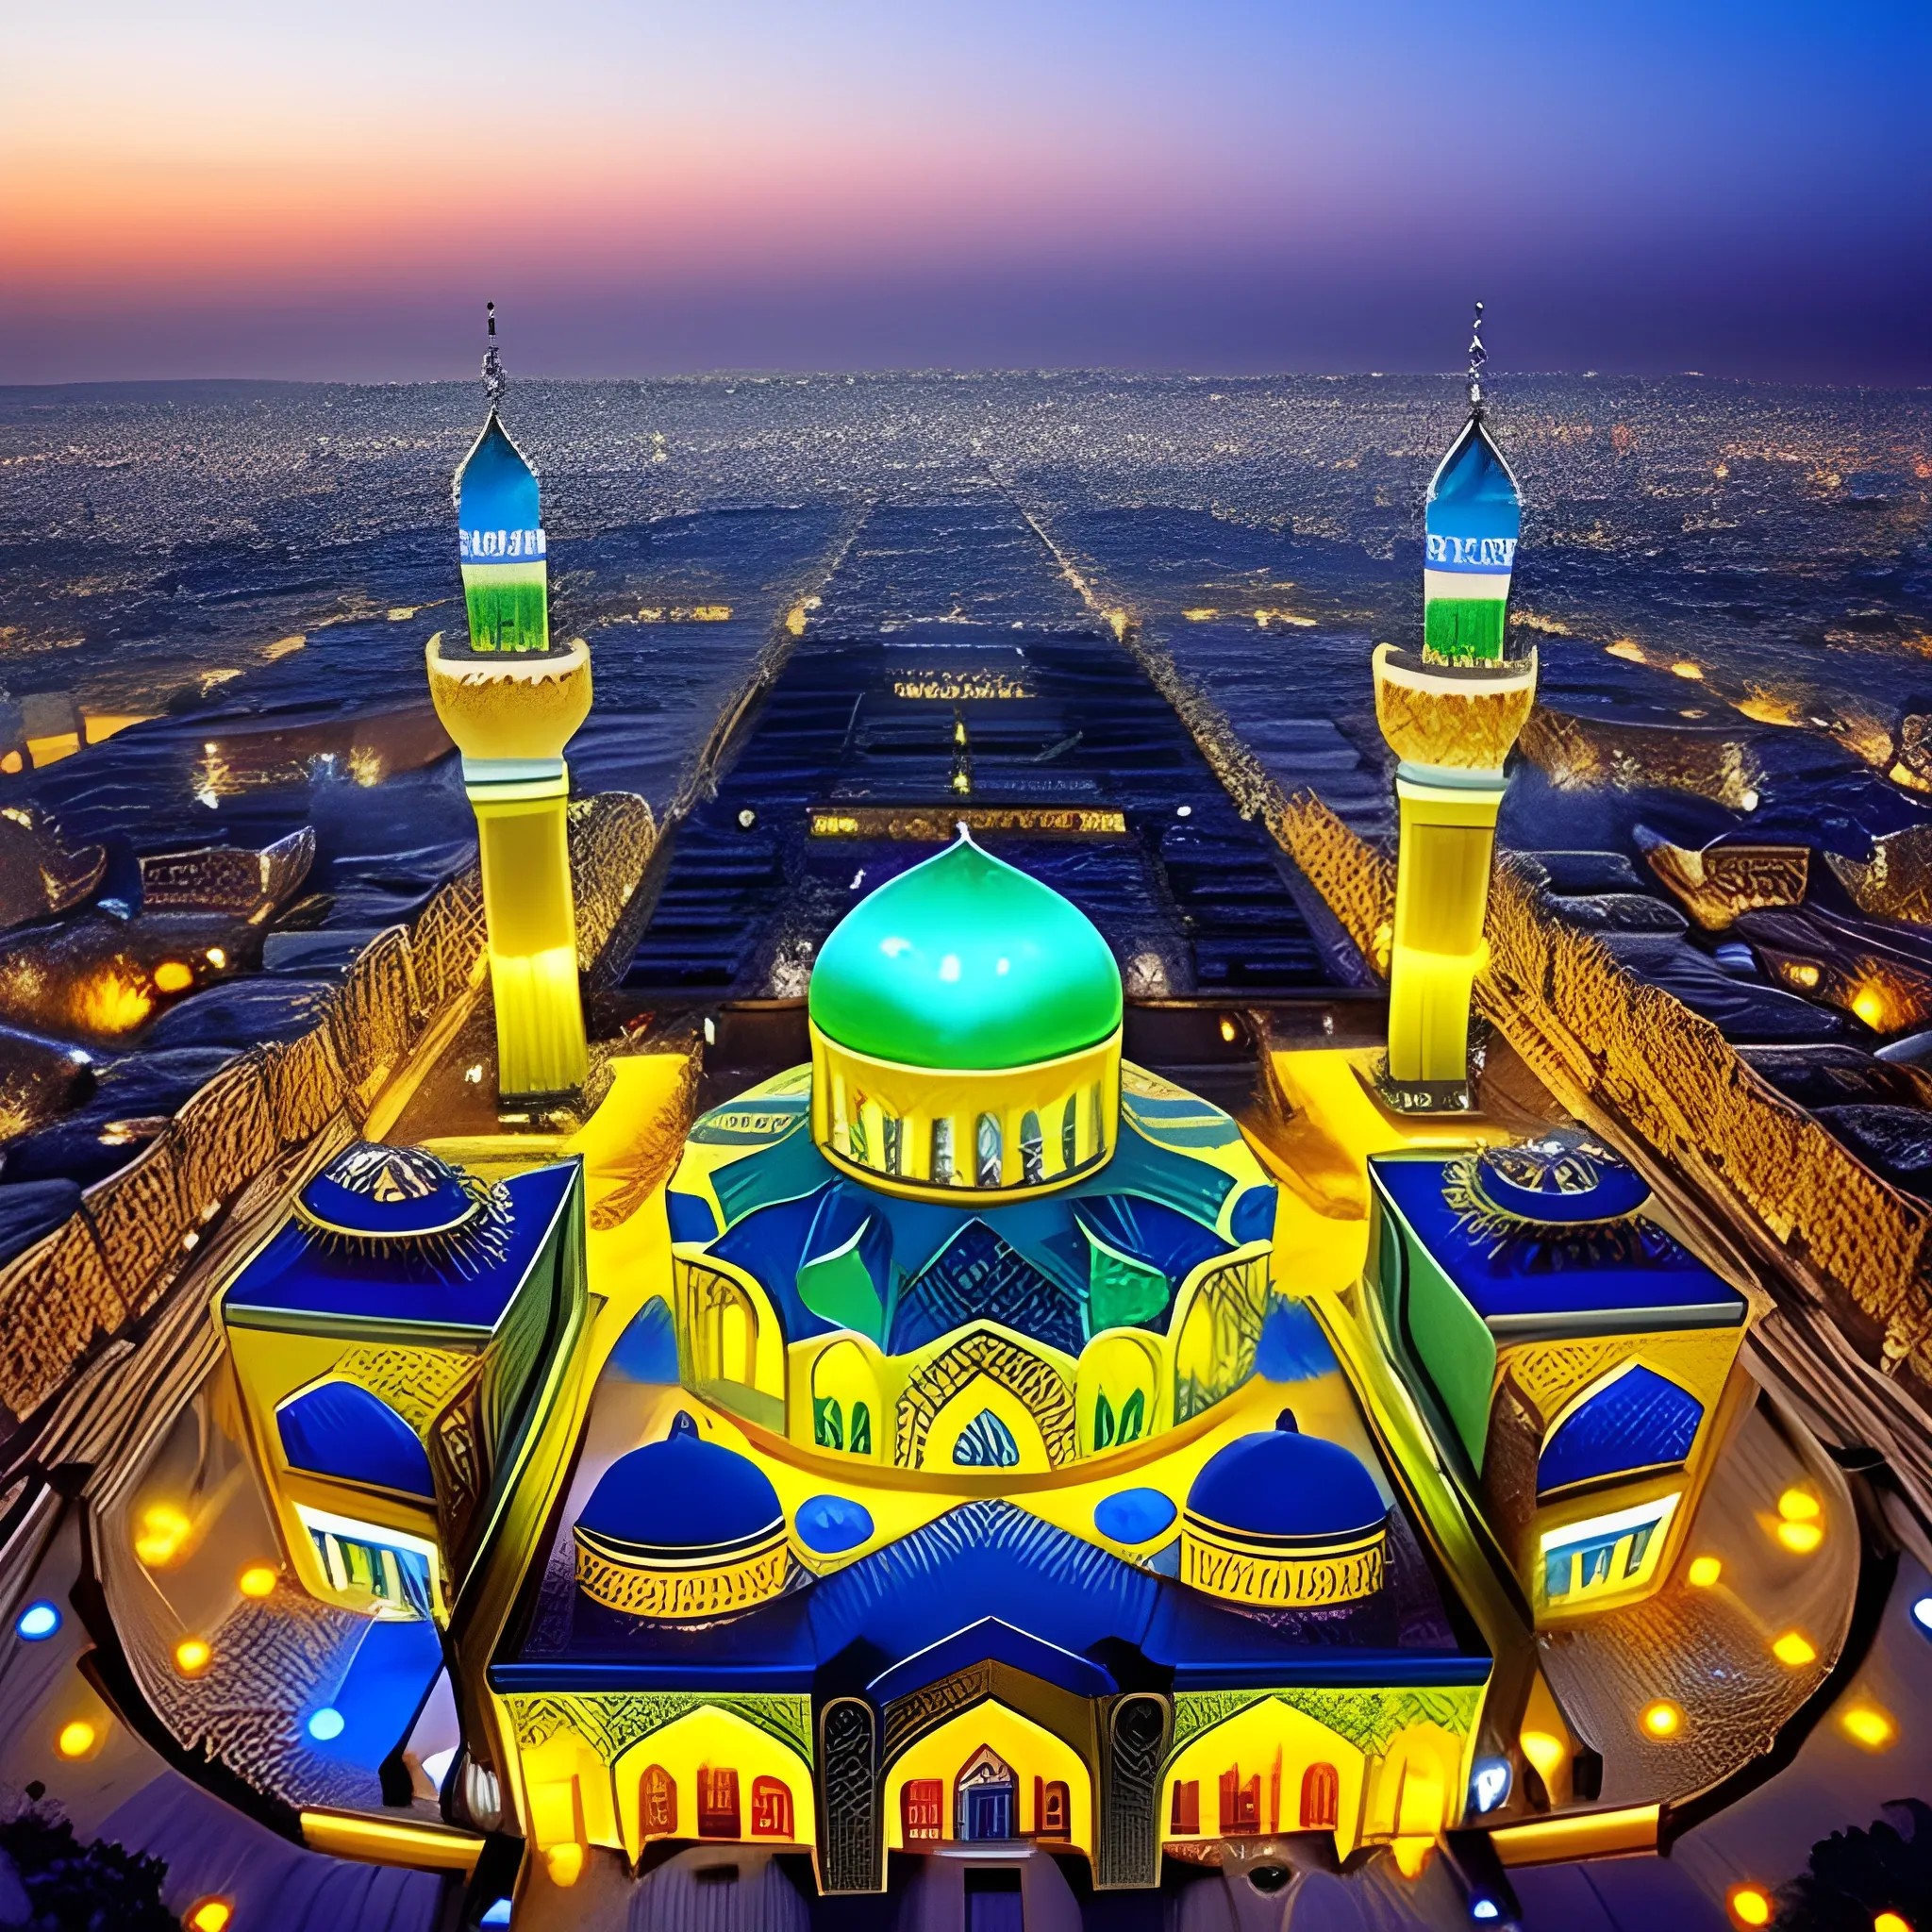 mashhad city in iran - nice- holy shirne
